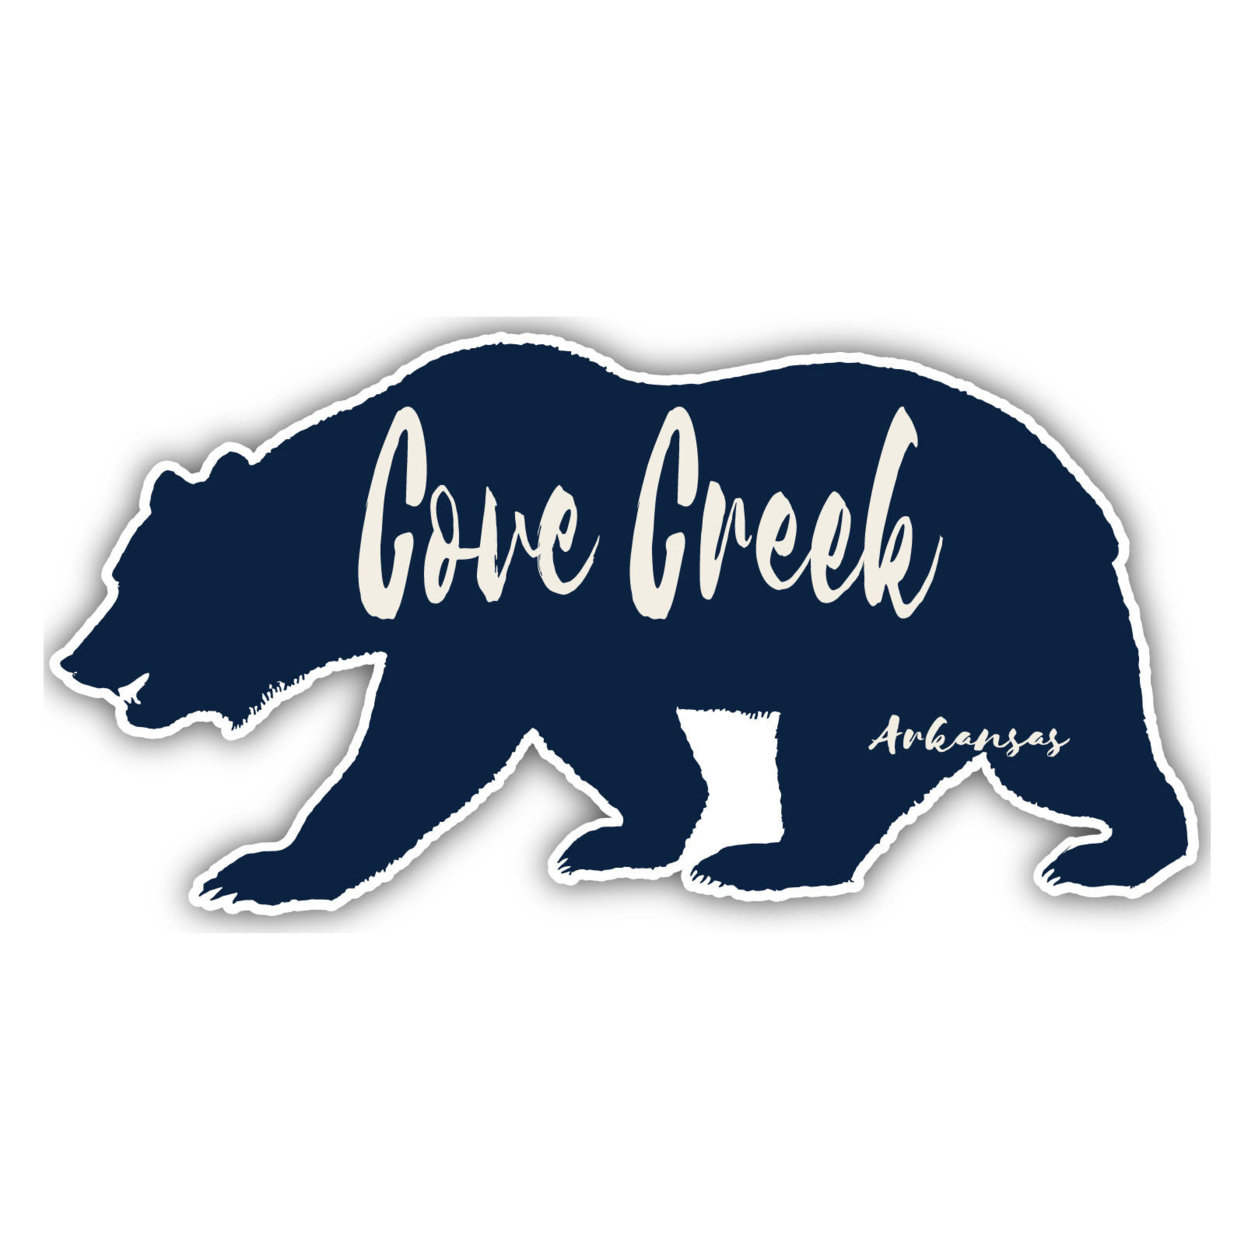 Cove Creek Arkansas Souvenir Decorative Stickers (Choose Theme And Size) - Single Unit, 2-Inch, Bear